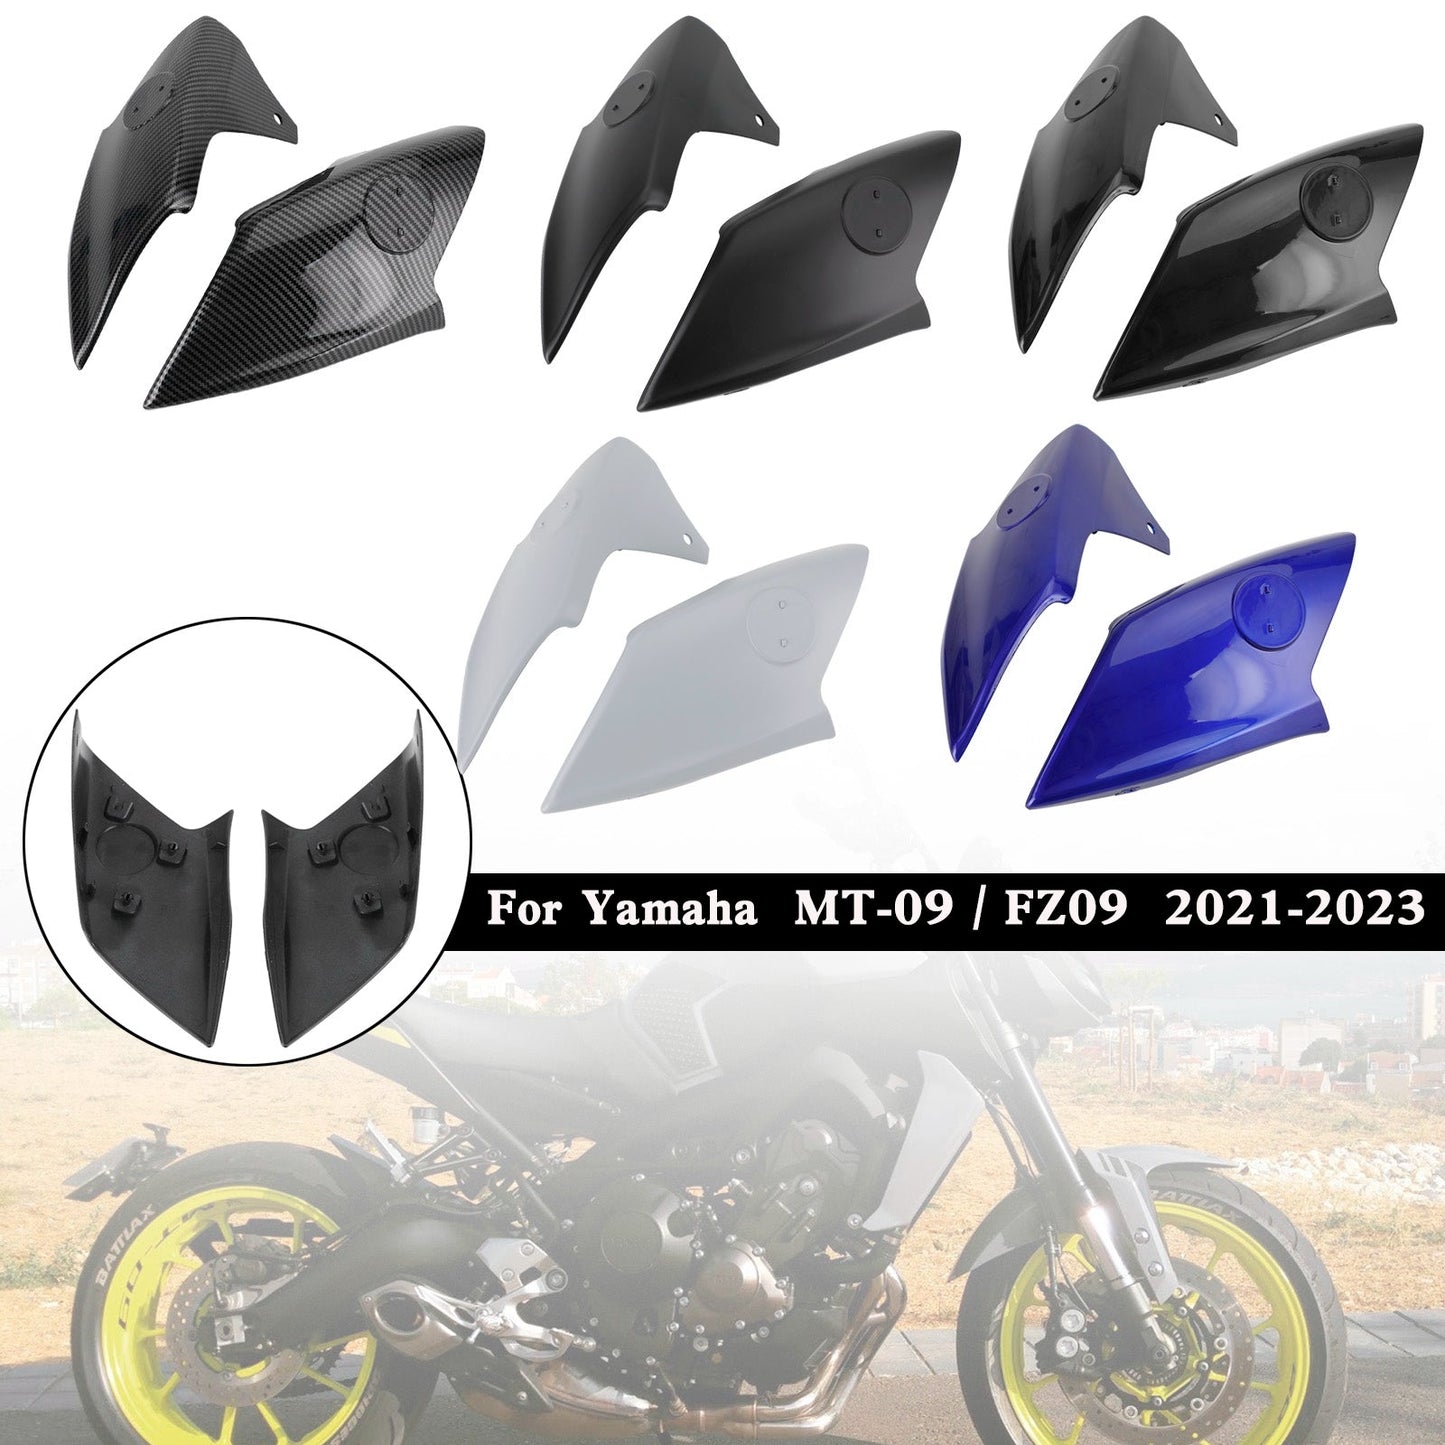 Yamaha MT-09 FZ09 2021-2023 Air Intake Covers Tank Side Panel Fairing